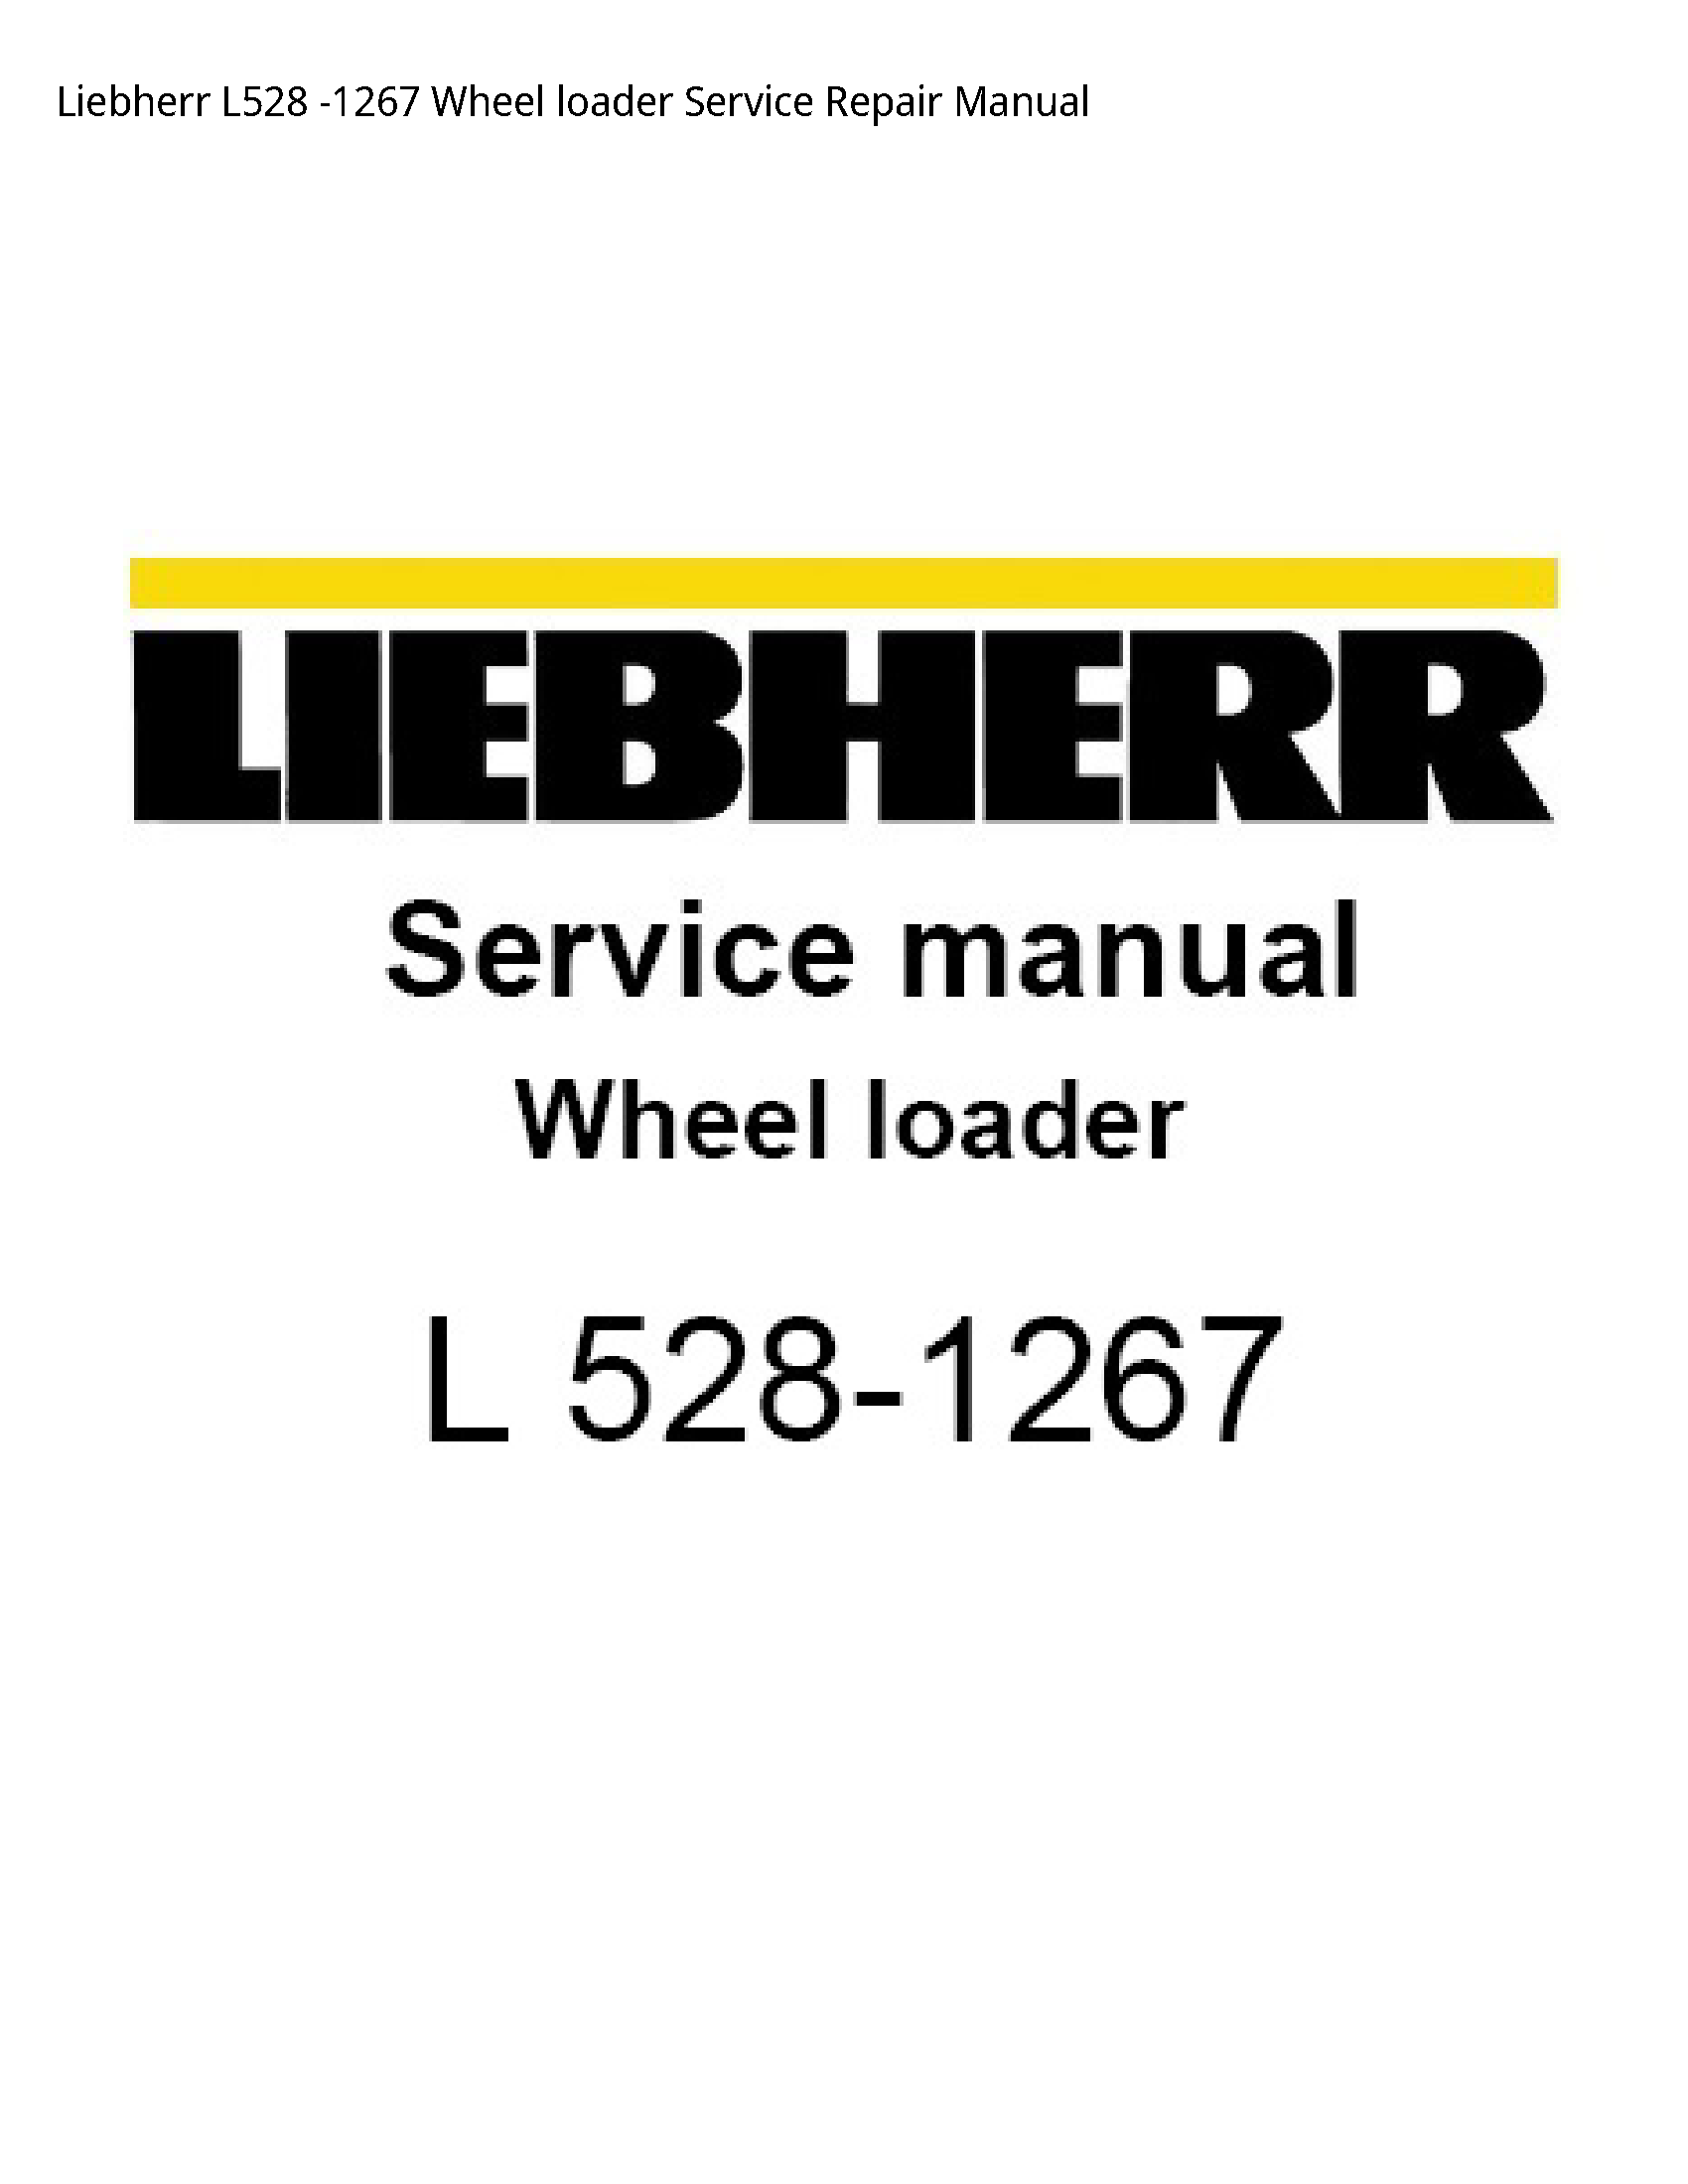 Liebherr L528 Wheel loader manual